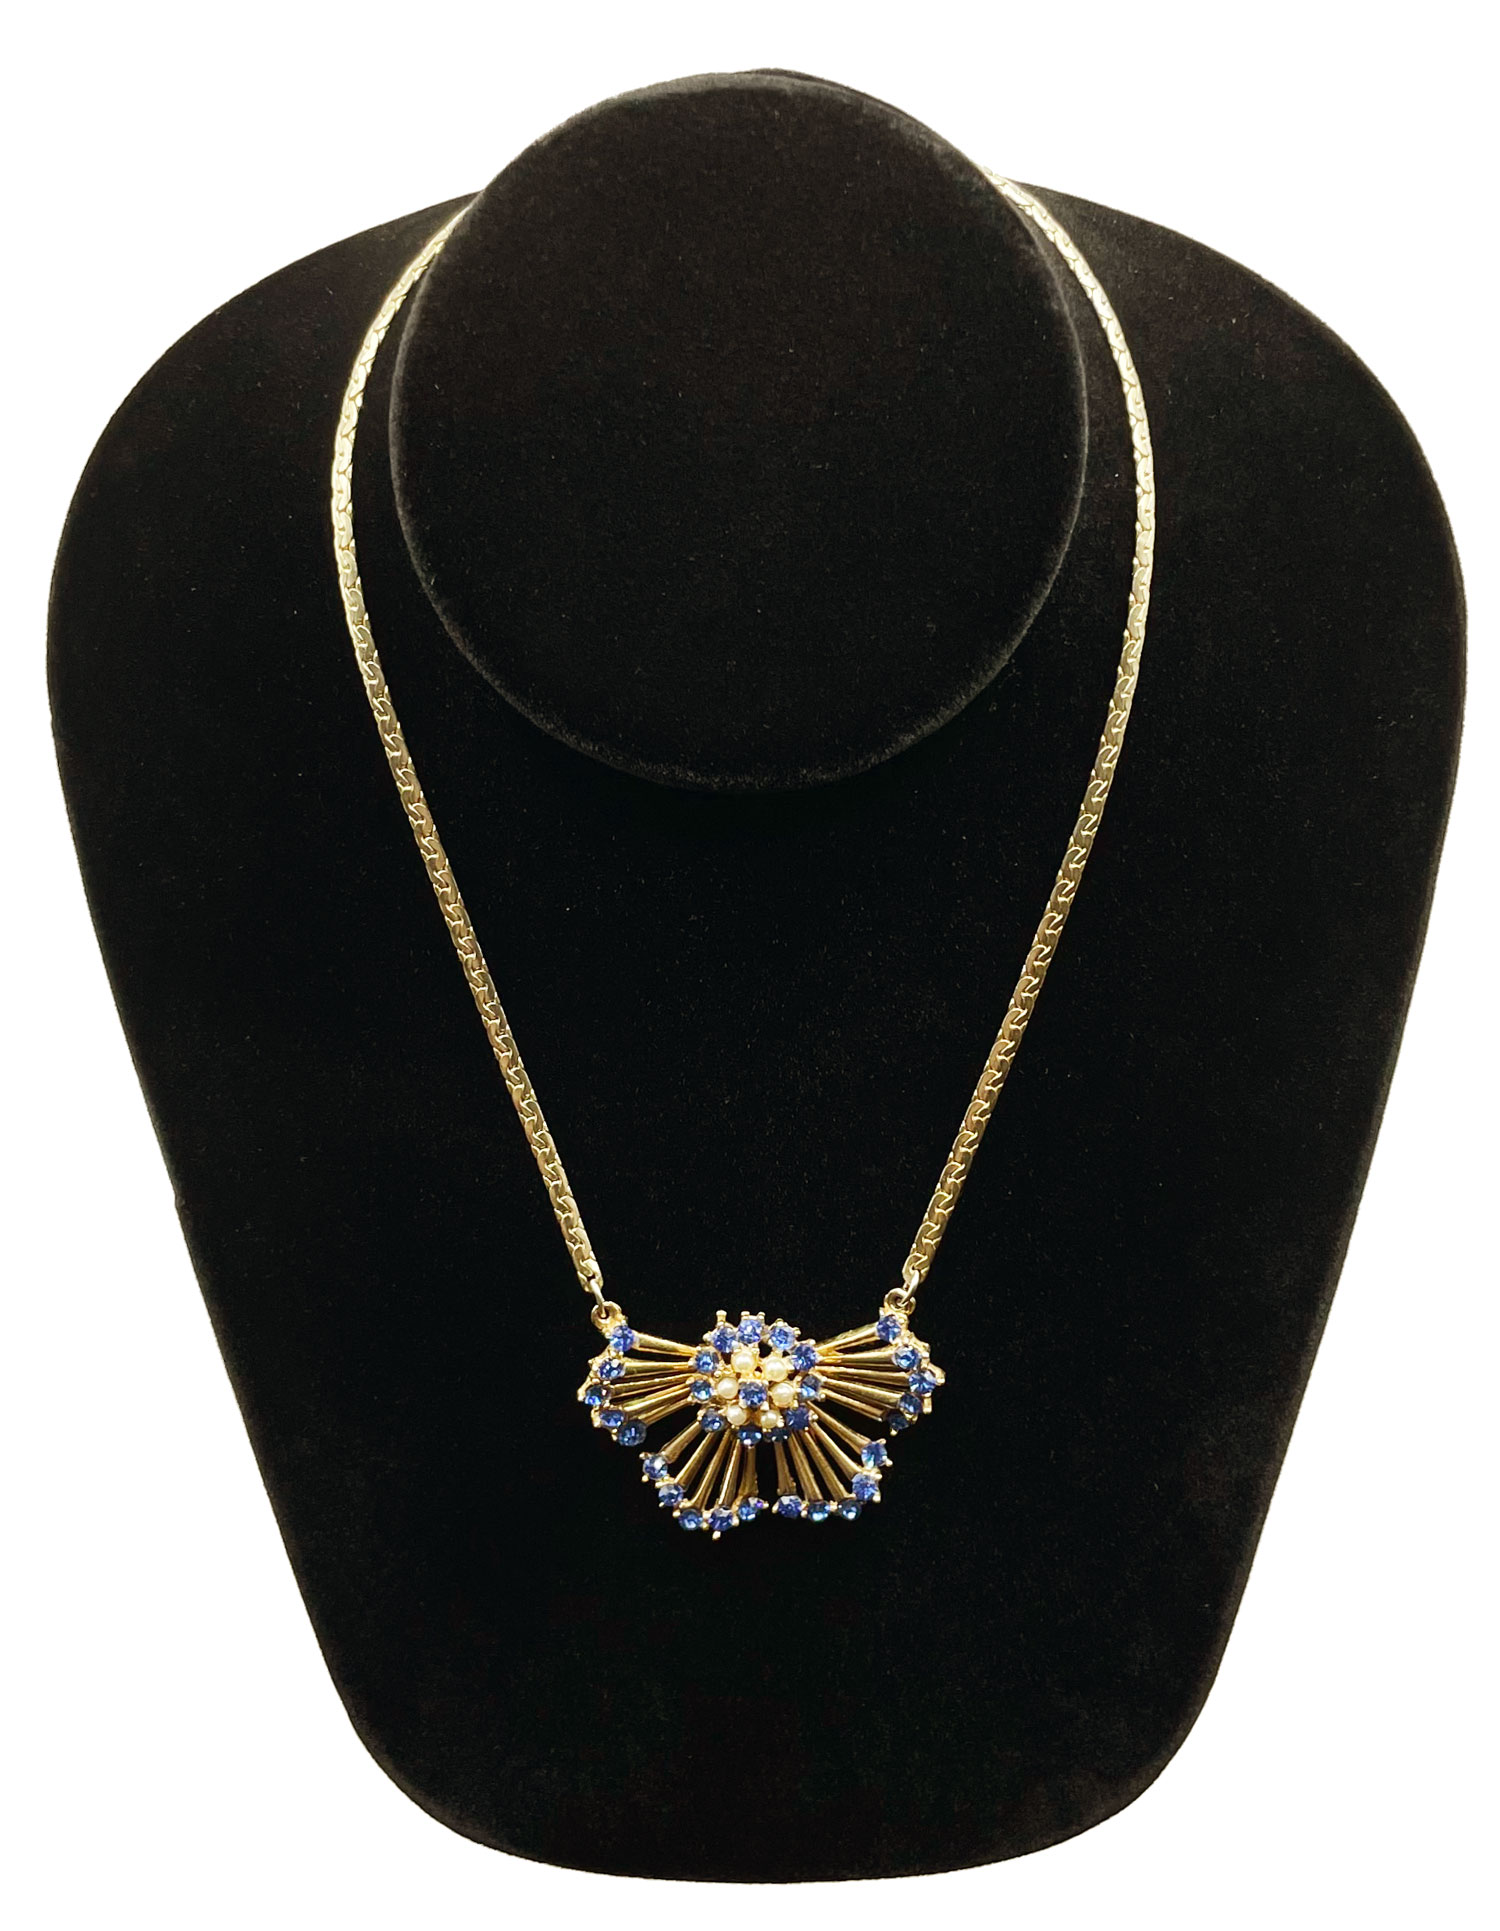 1940s blue rhinestone necklace